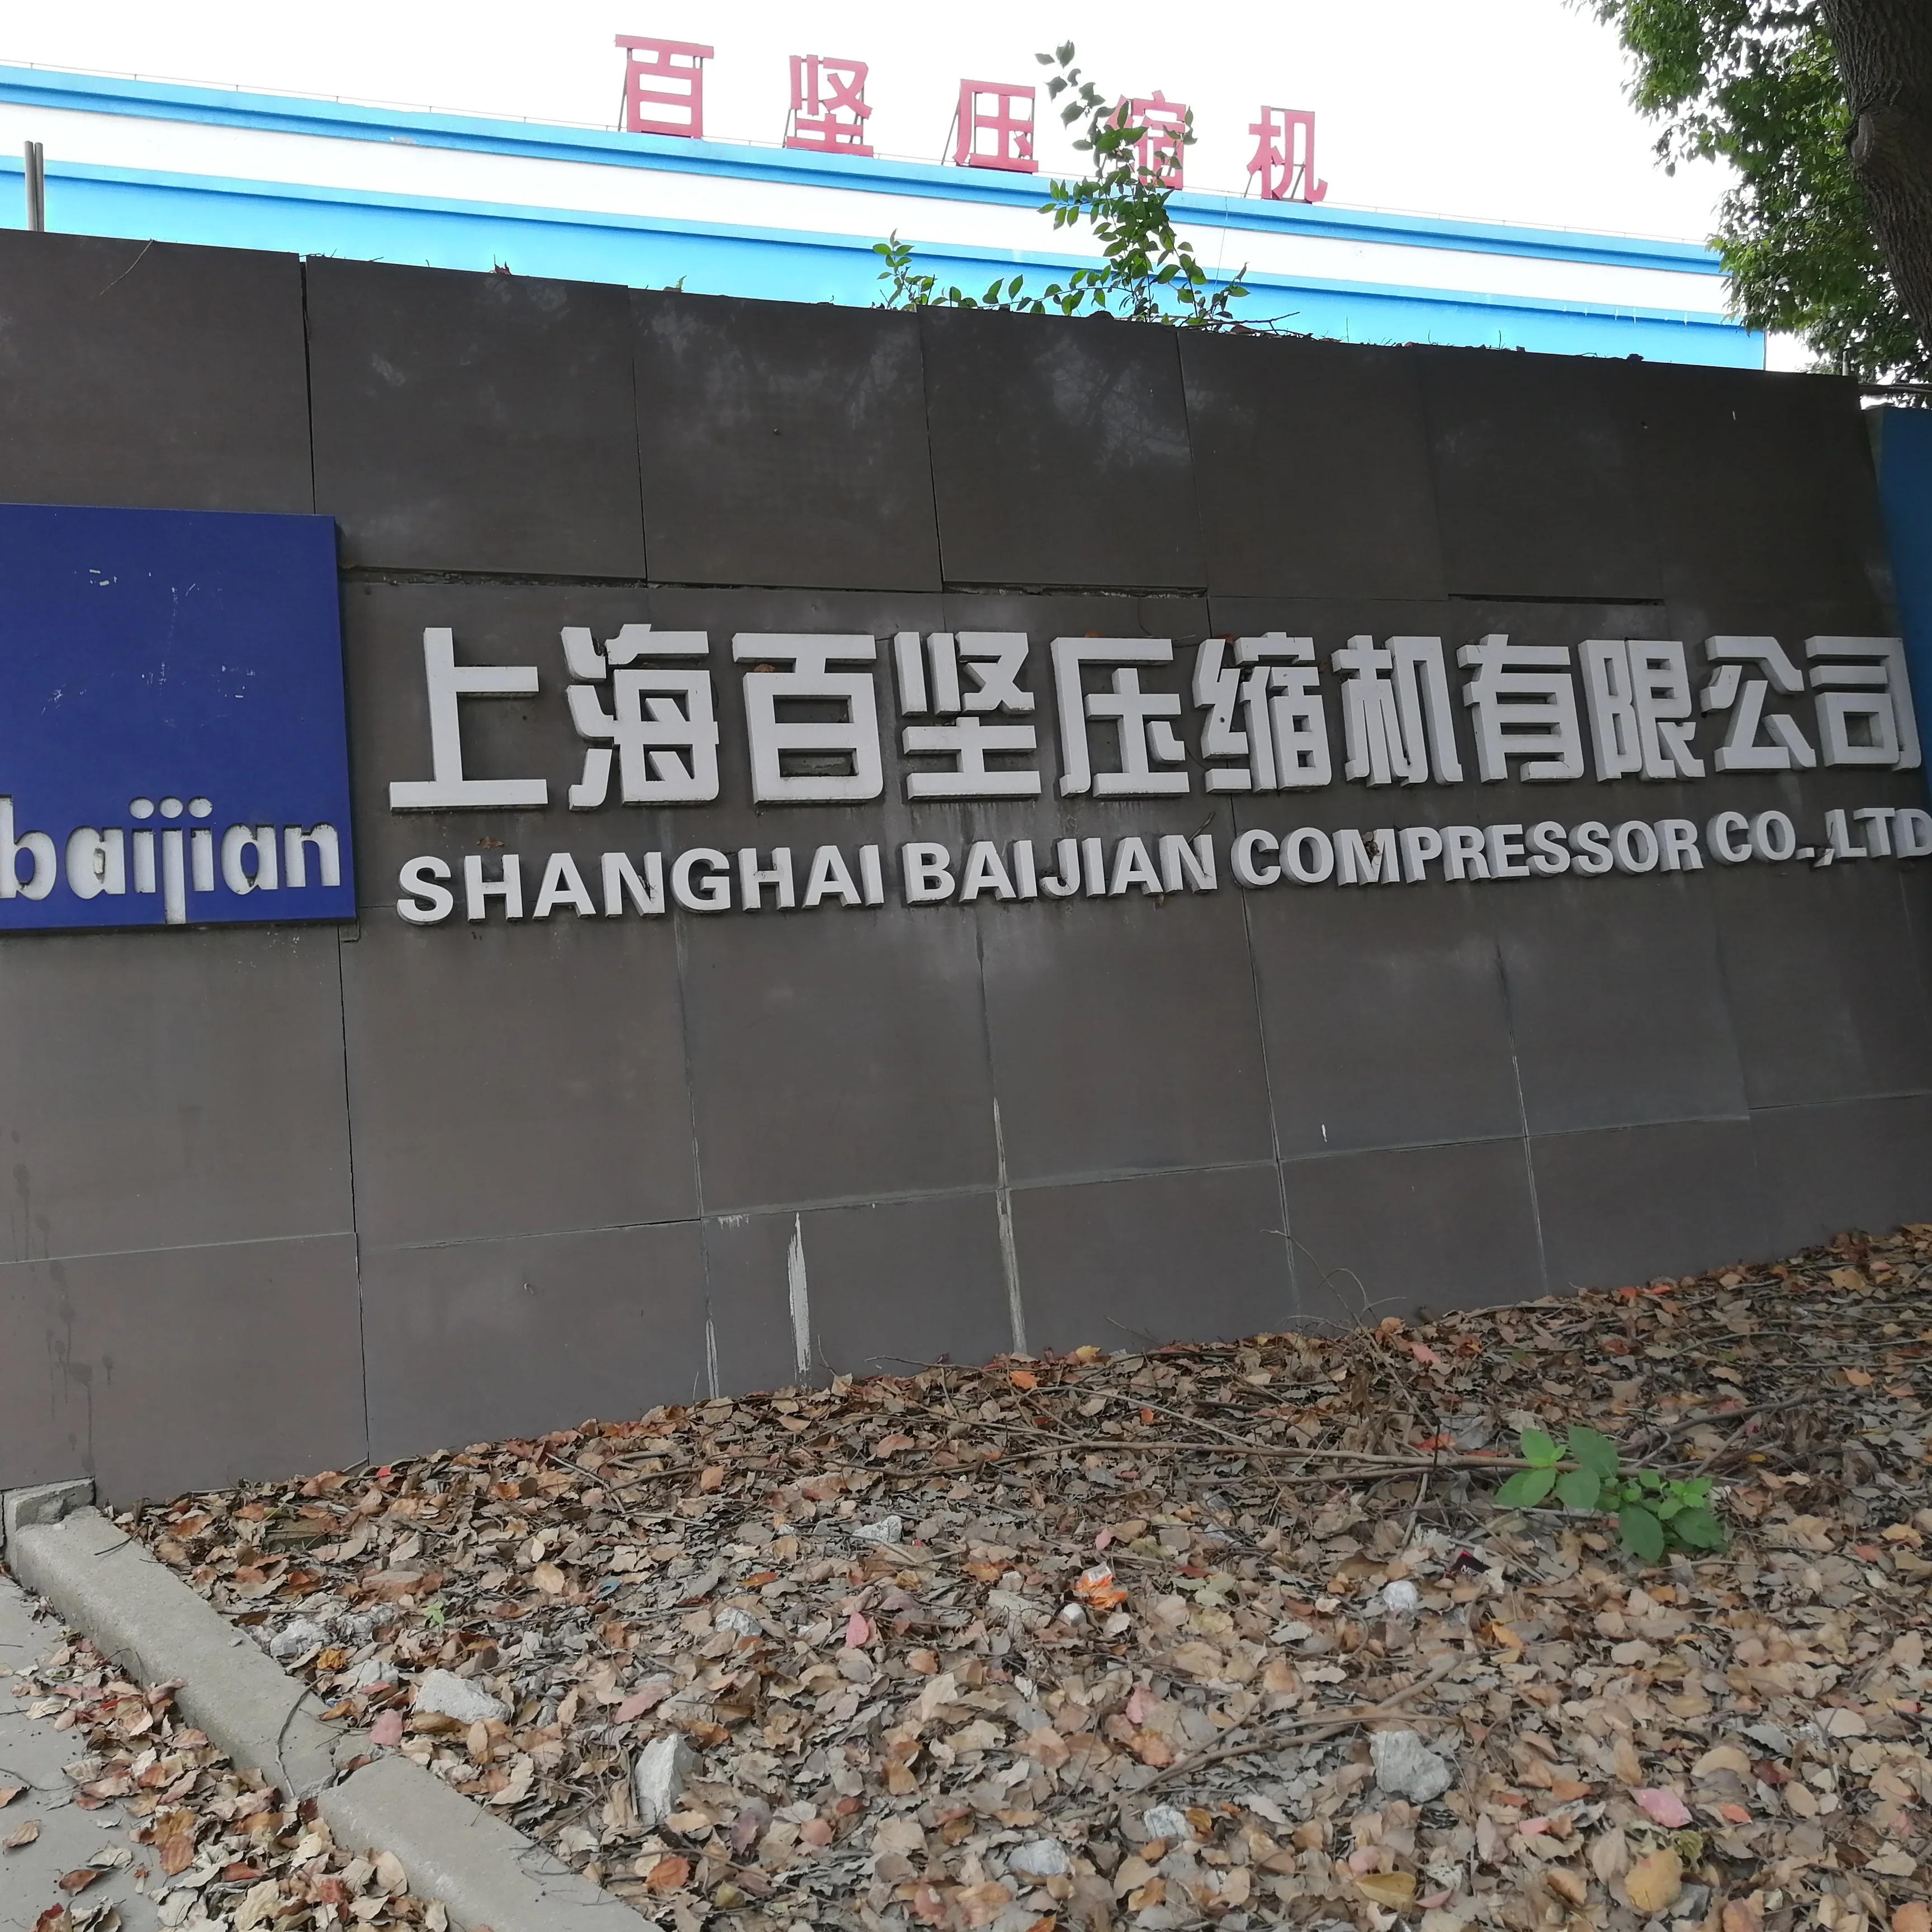 product-Baijian-Light oil scroll air compressor price 75kw 10hp 230L-img